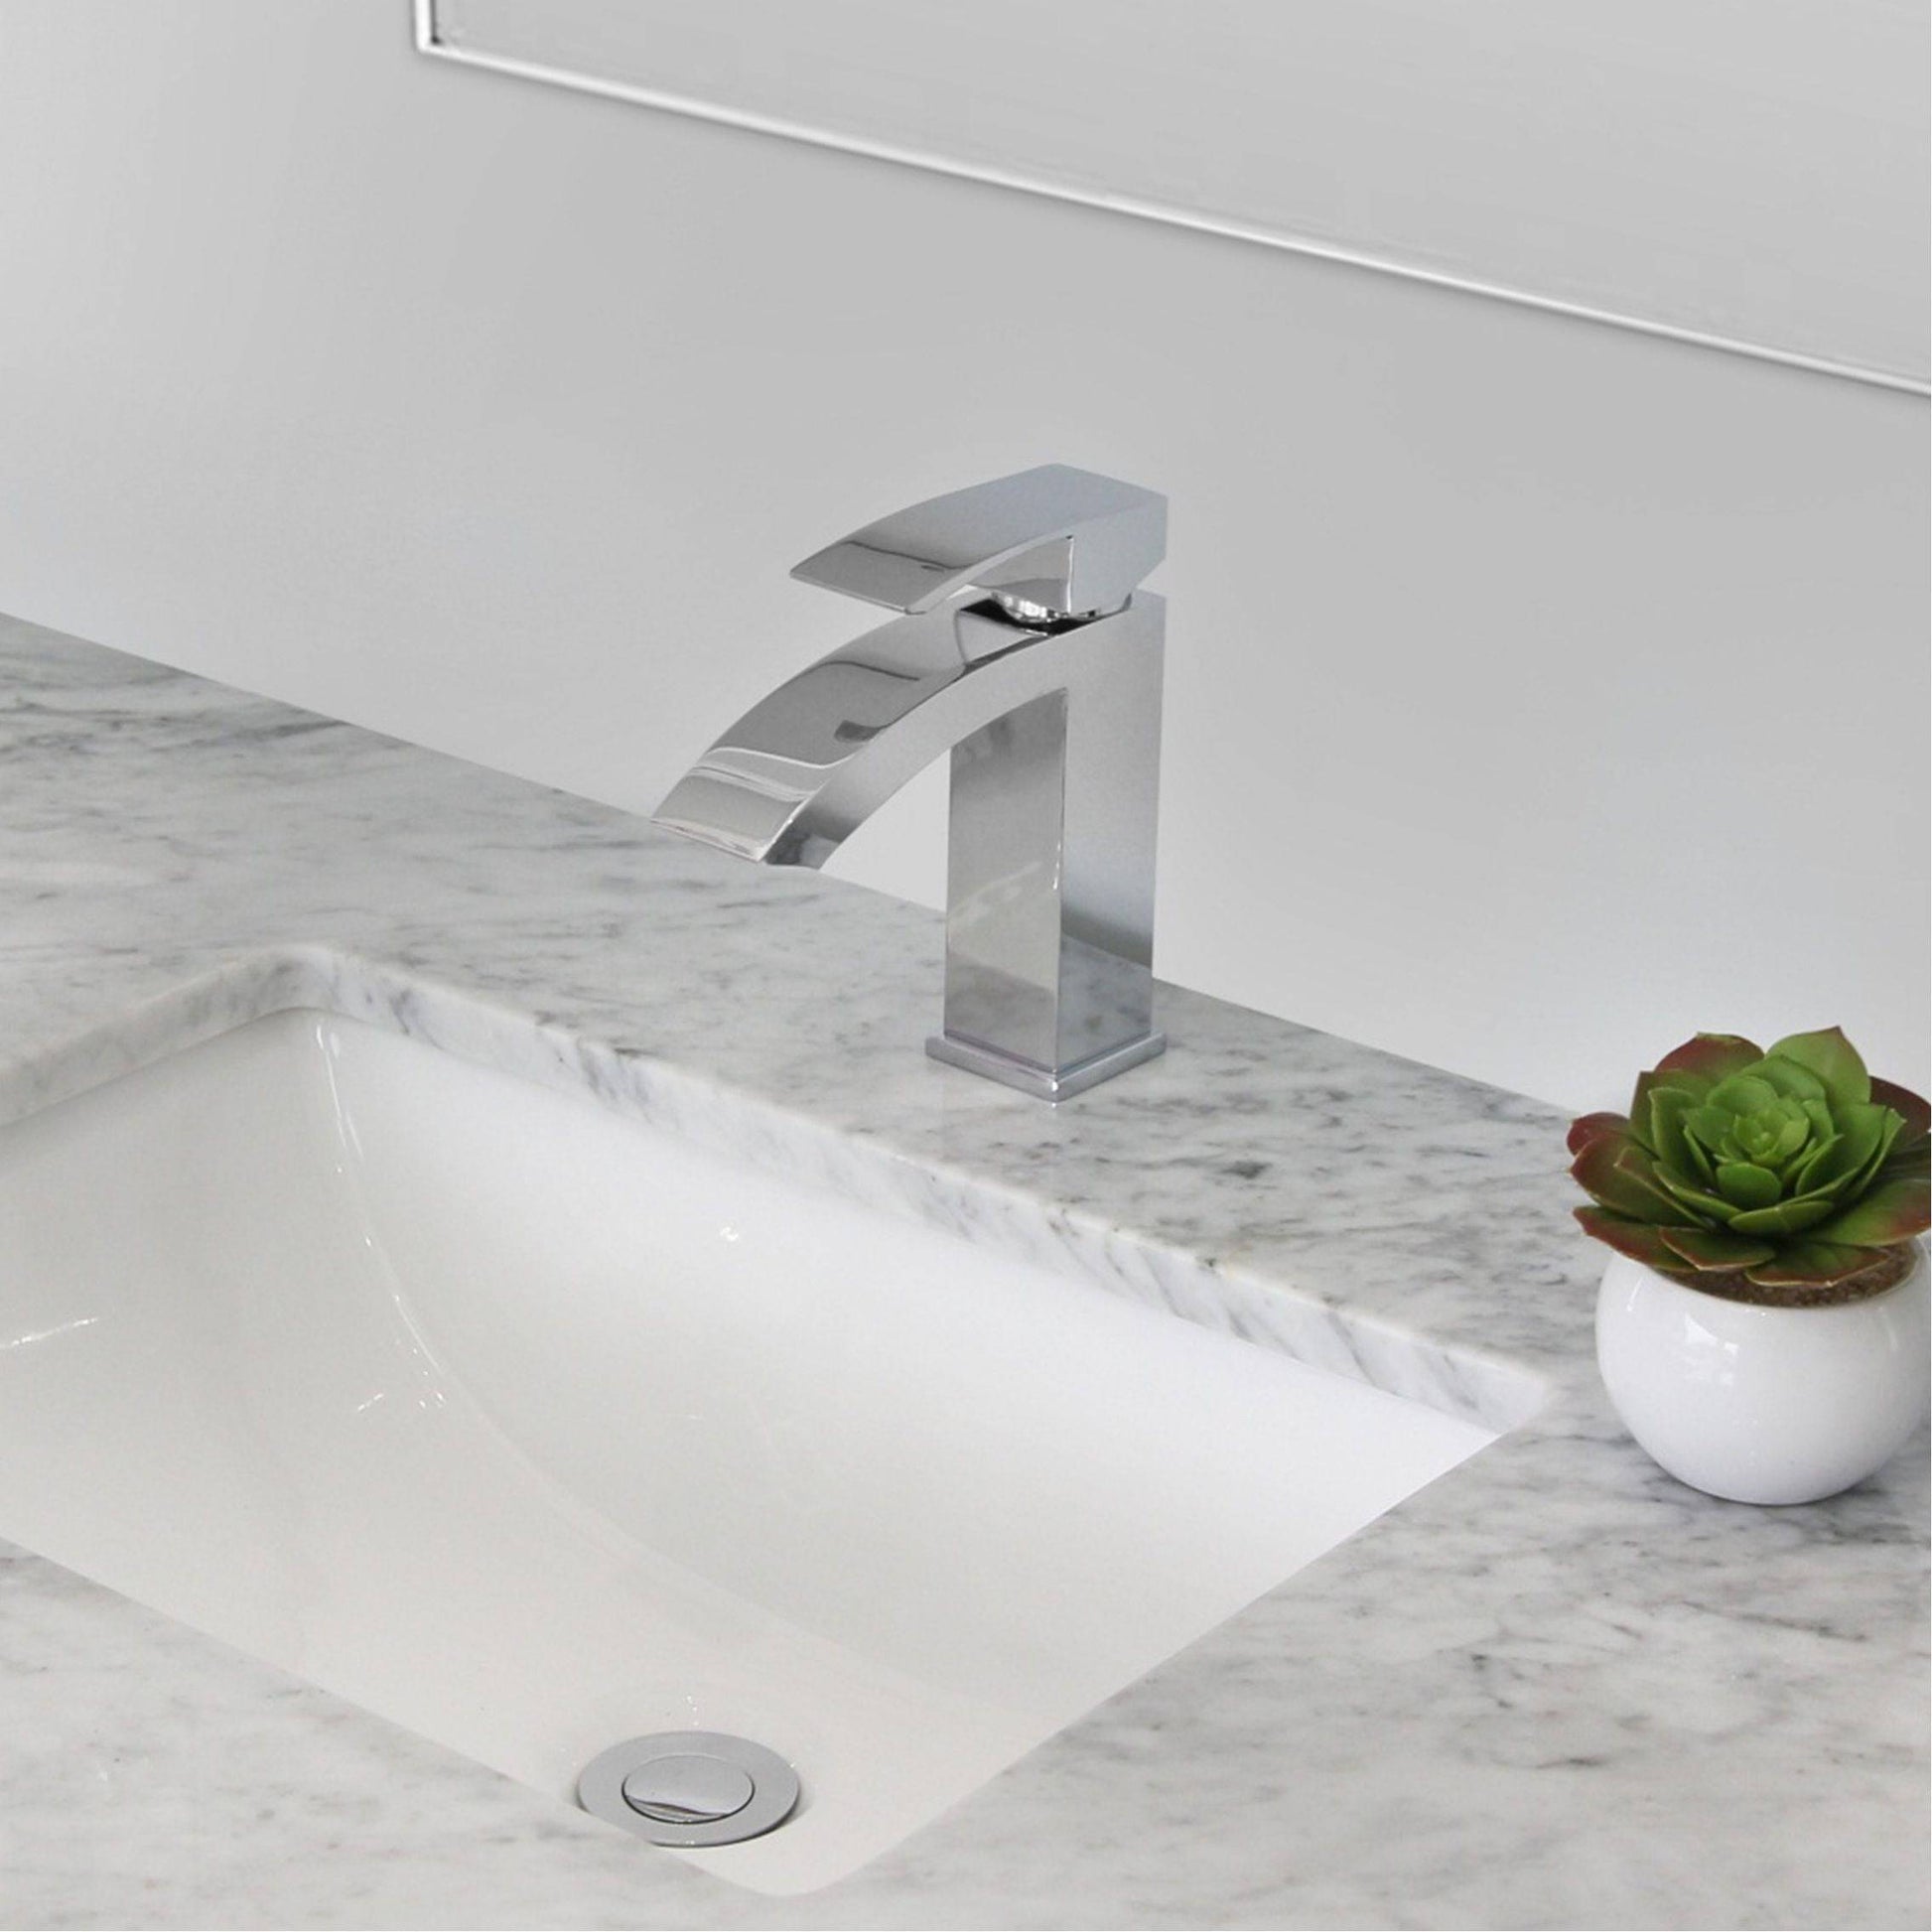 Stylish Sabana Single Handle 7" Bathroom Faucet for Single Hole Brass Basin Mixer Tap, Polished Chrome Finish B-109C - Renoz